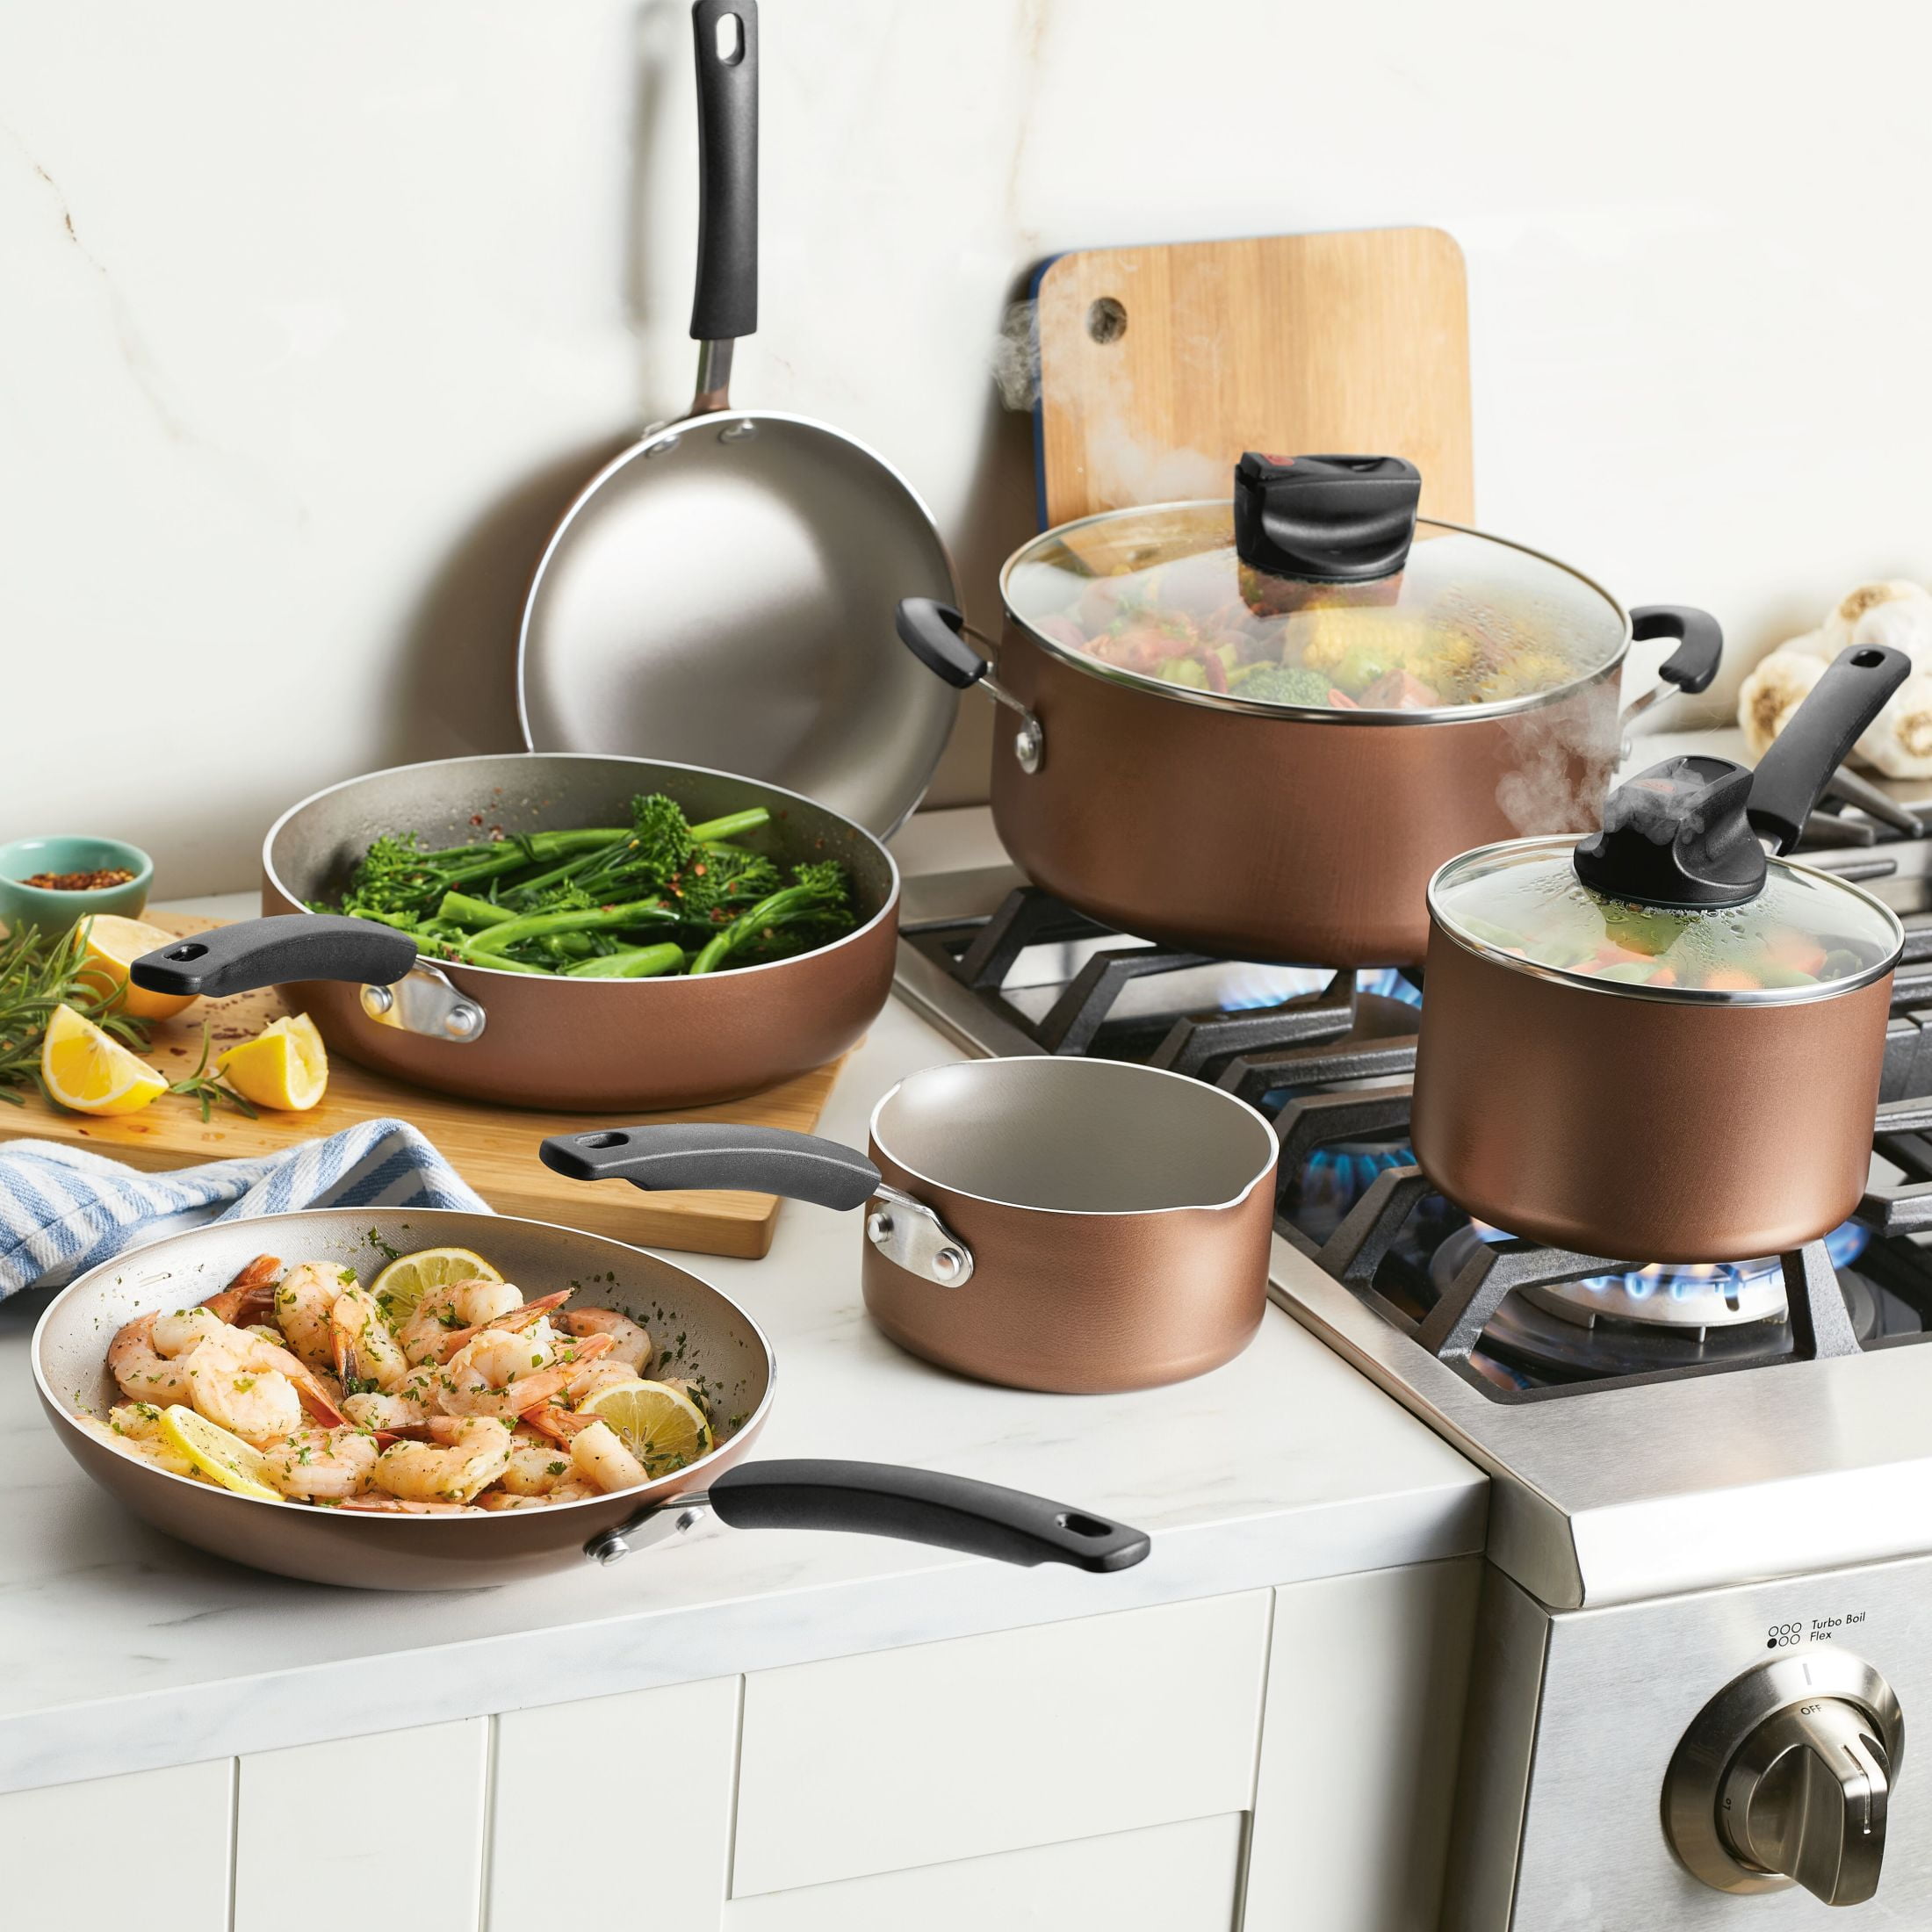 Style Nonstick Cookware Set, 10-Piece — Farberware Cookware